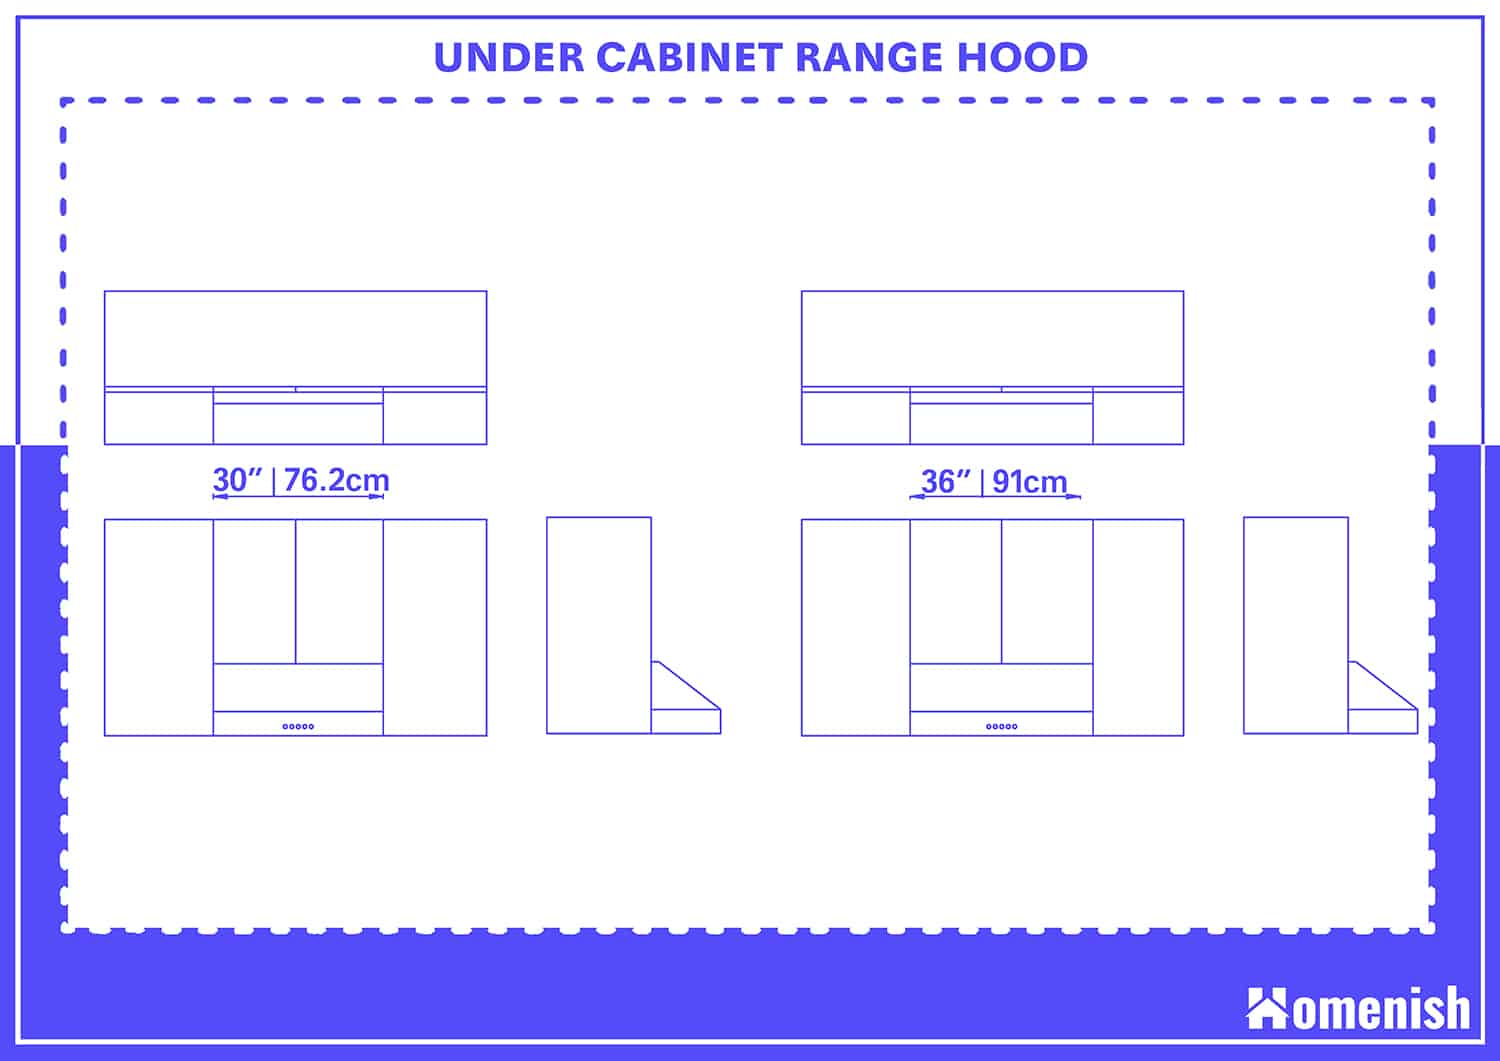 Under Cabinet Range Hood